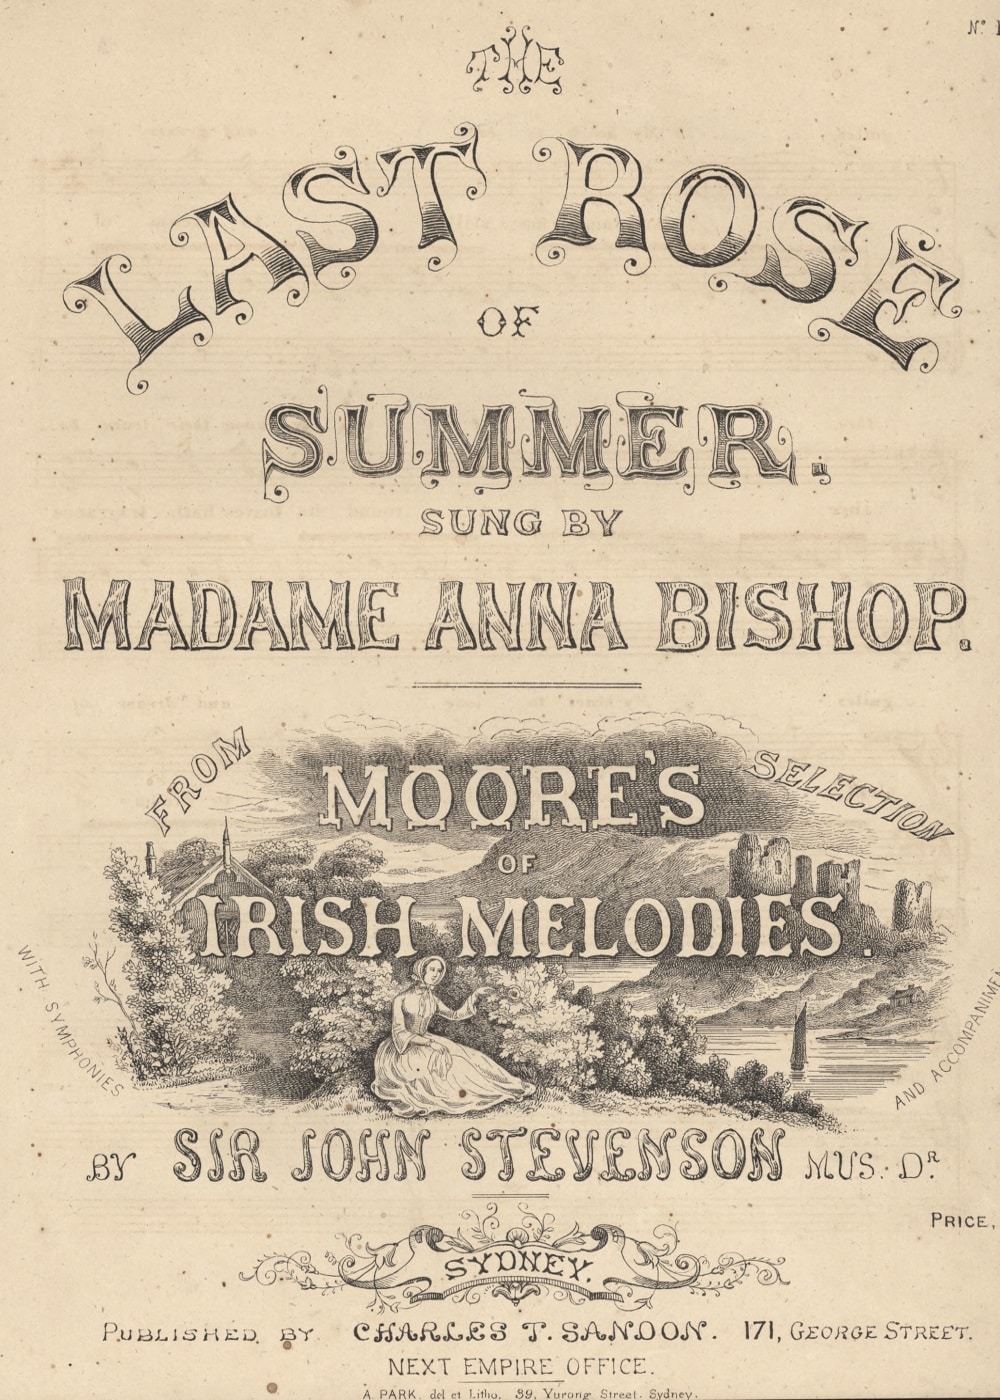 The last rose of summer, sung by Madame Anna Bishop (Sydney: Sandon, 1856)